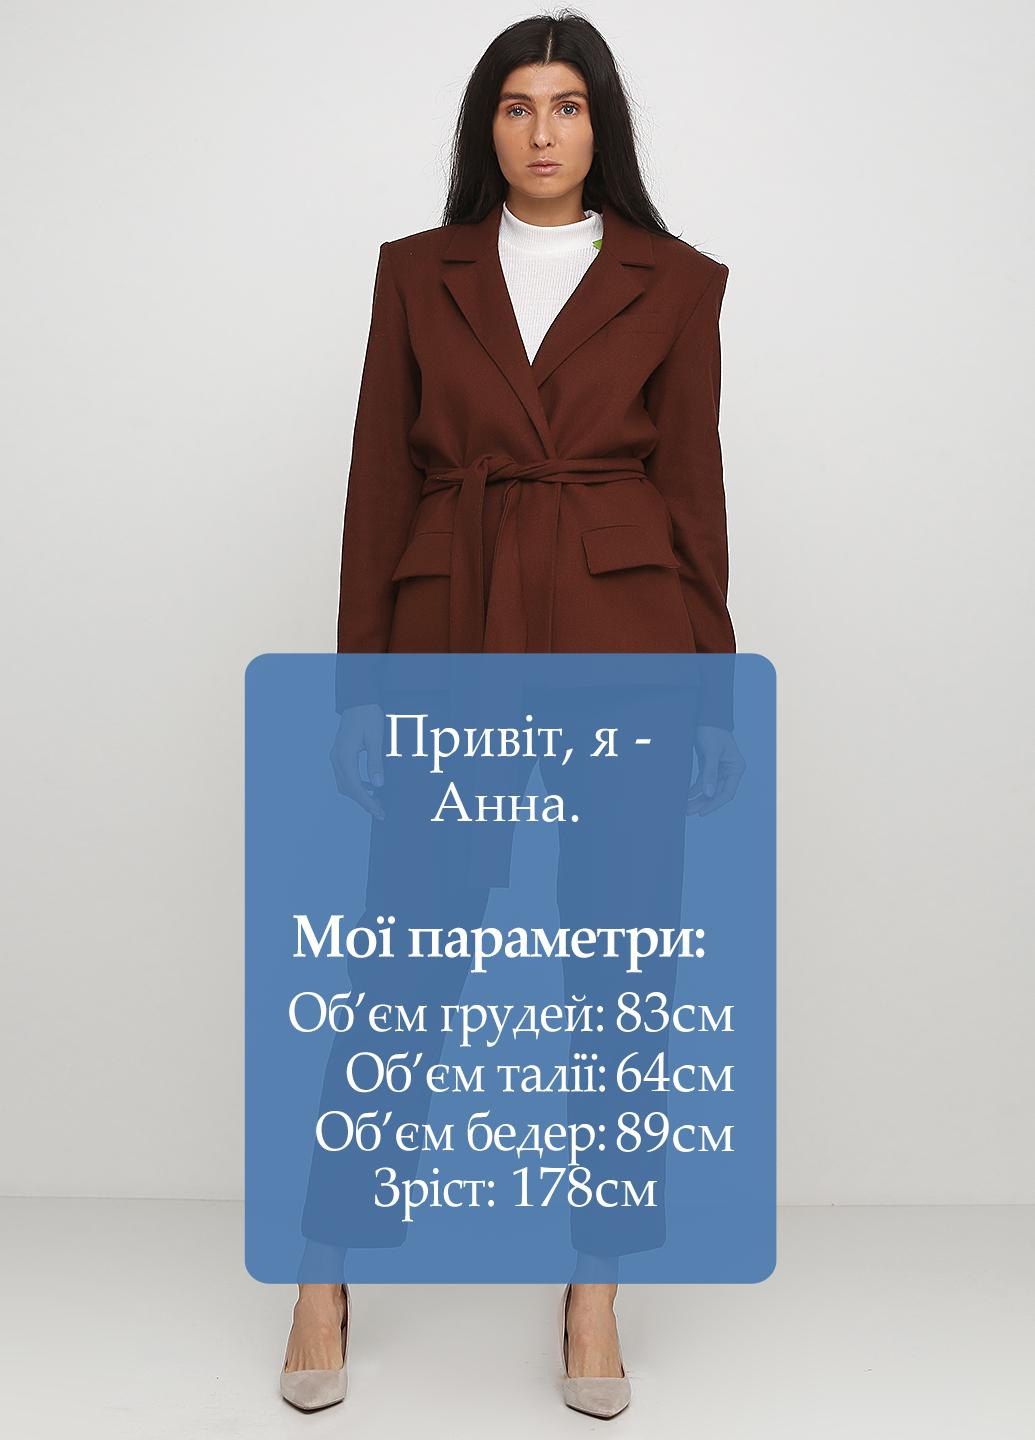 Костюм (жакет, брюки) Kristina Mamedova брючный однотонный коричневый кэжуал